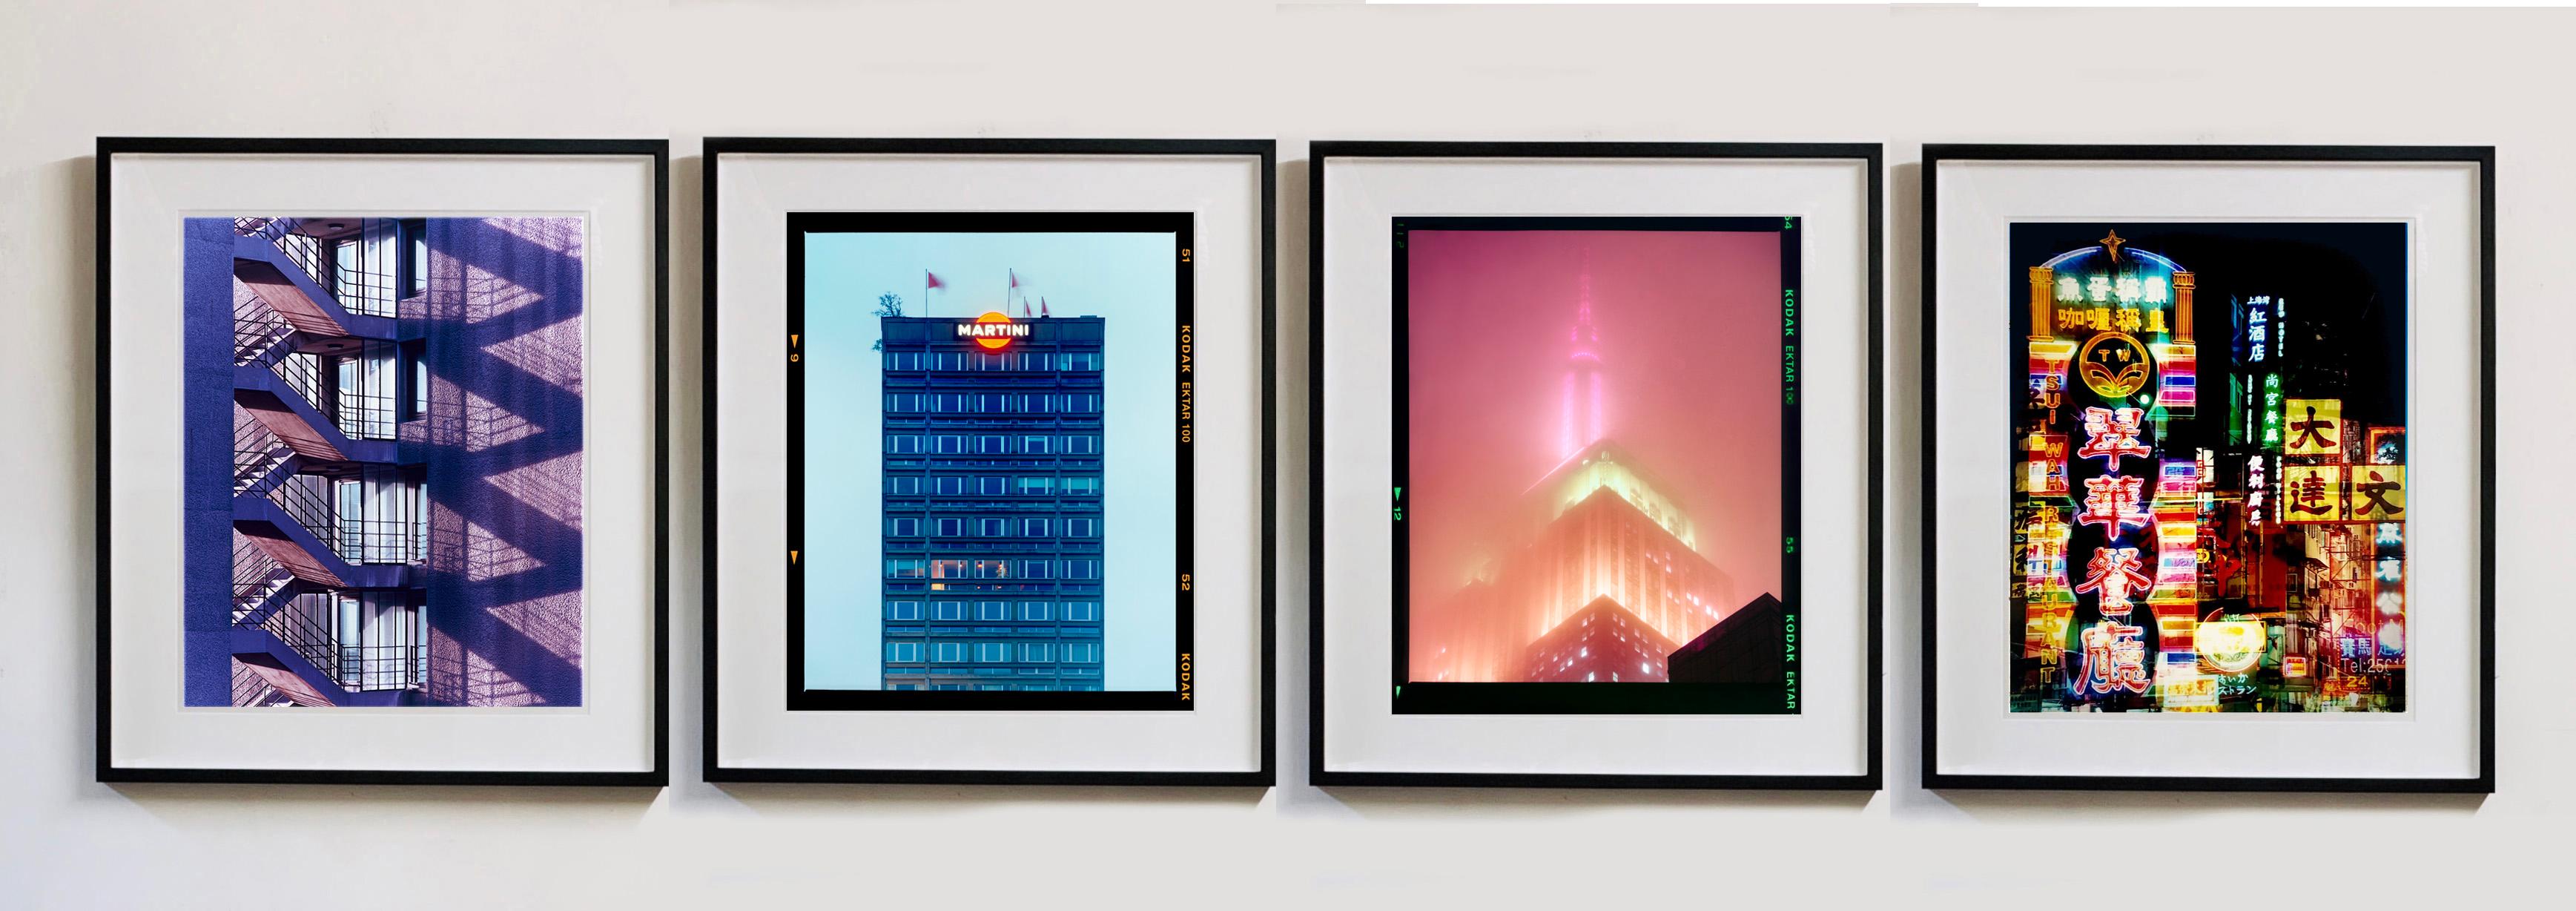 London, Milan, New York, Hong Kong (V2) - Set of Four Framed Color Photographs For Sale 3